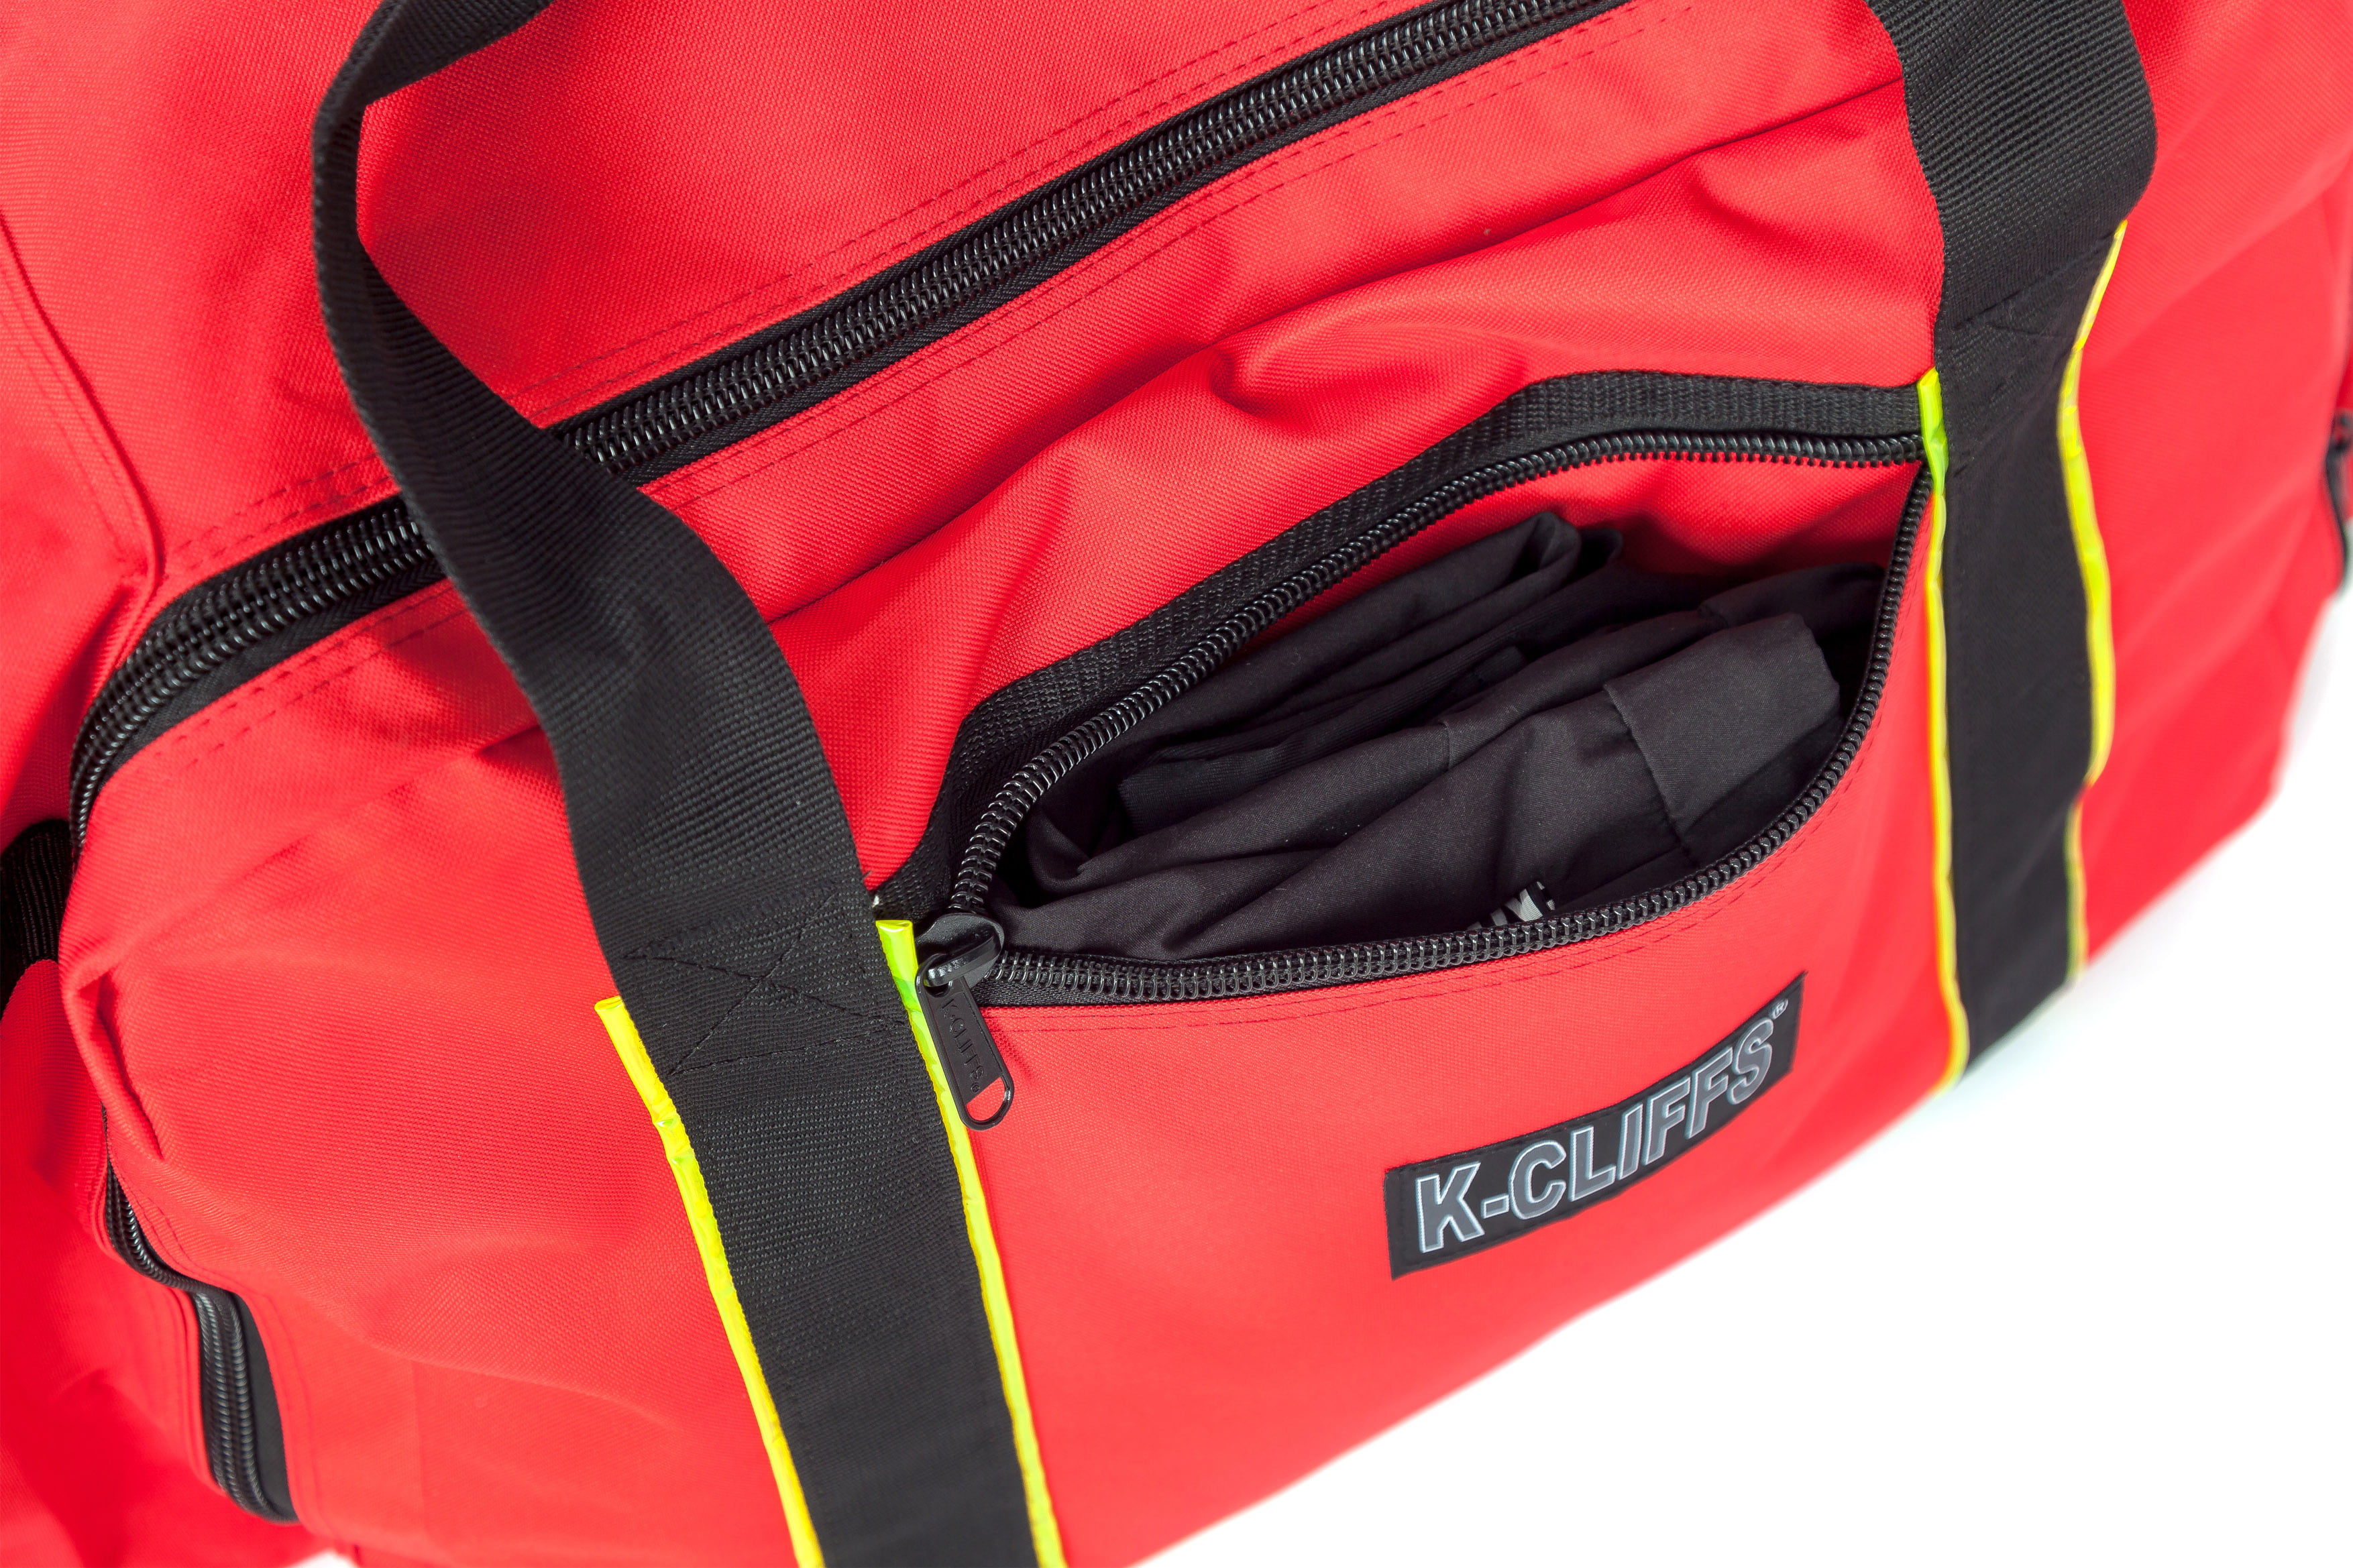 K-Cliffs Heavy Duty Fireman/Paramedic Medical Equipment Bag Fire Fighter  Gear Travel Bag w/ Helmet Pocket 